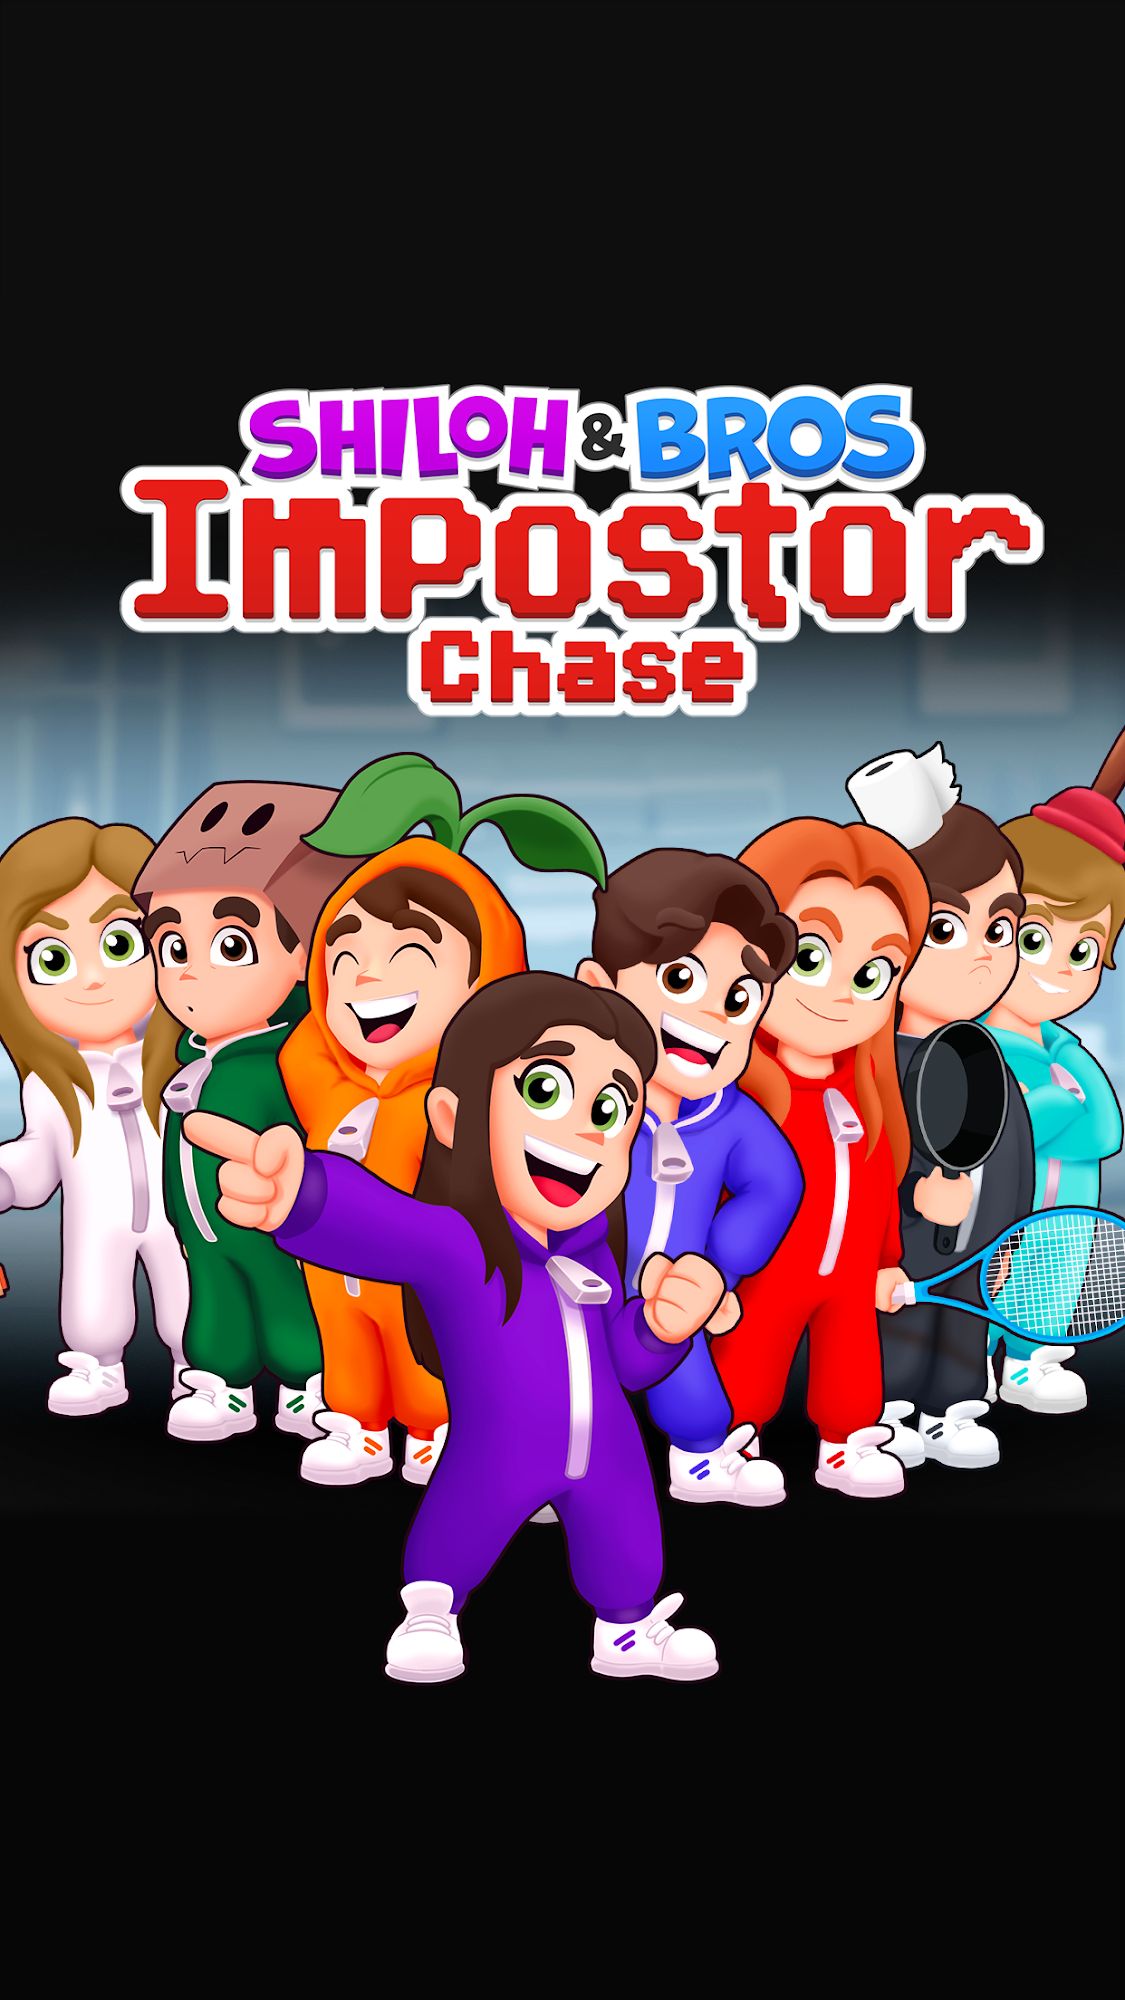 Scarica Shiloh & Bros Impostor Chase gratis per Android.